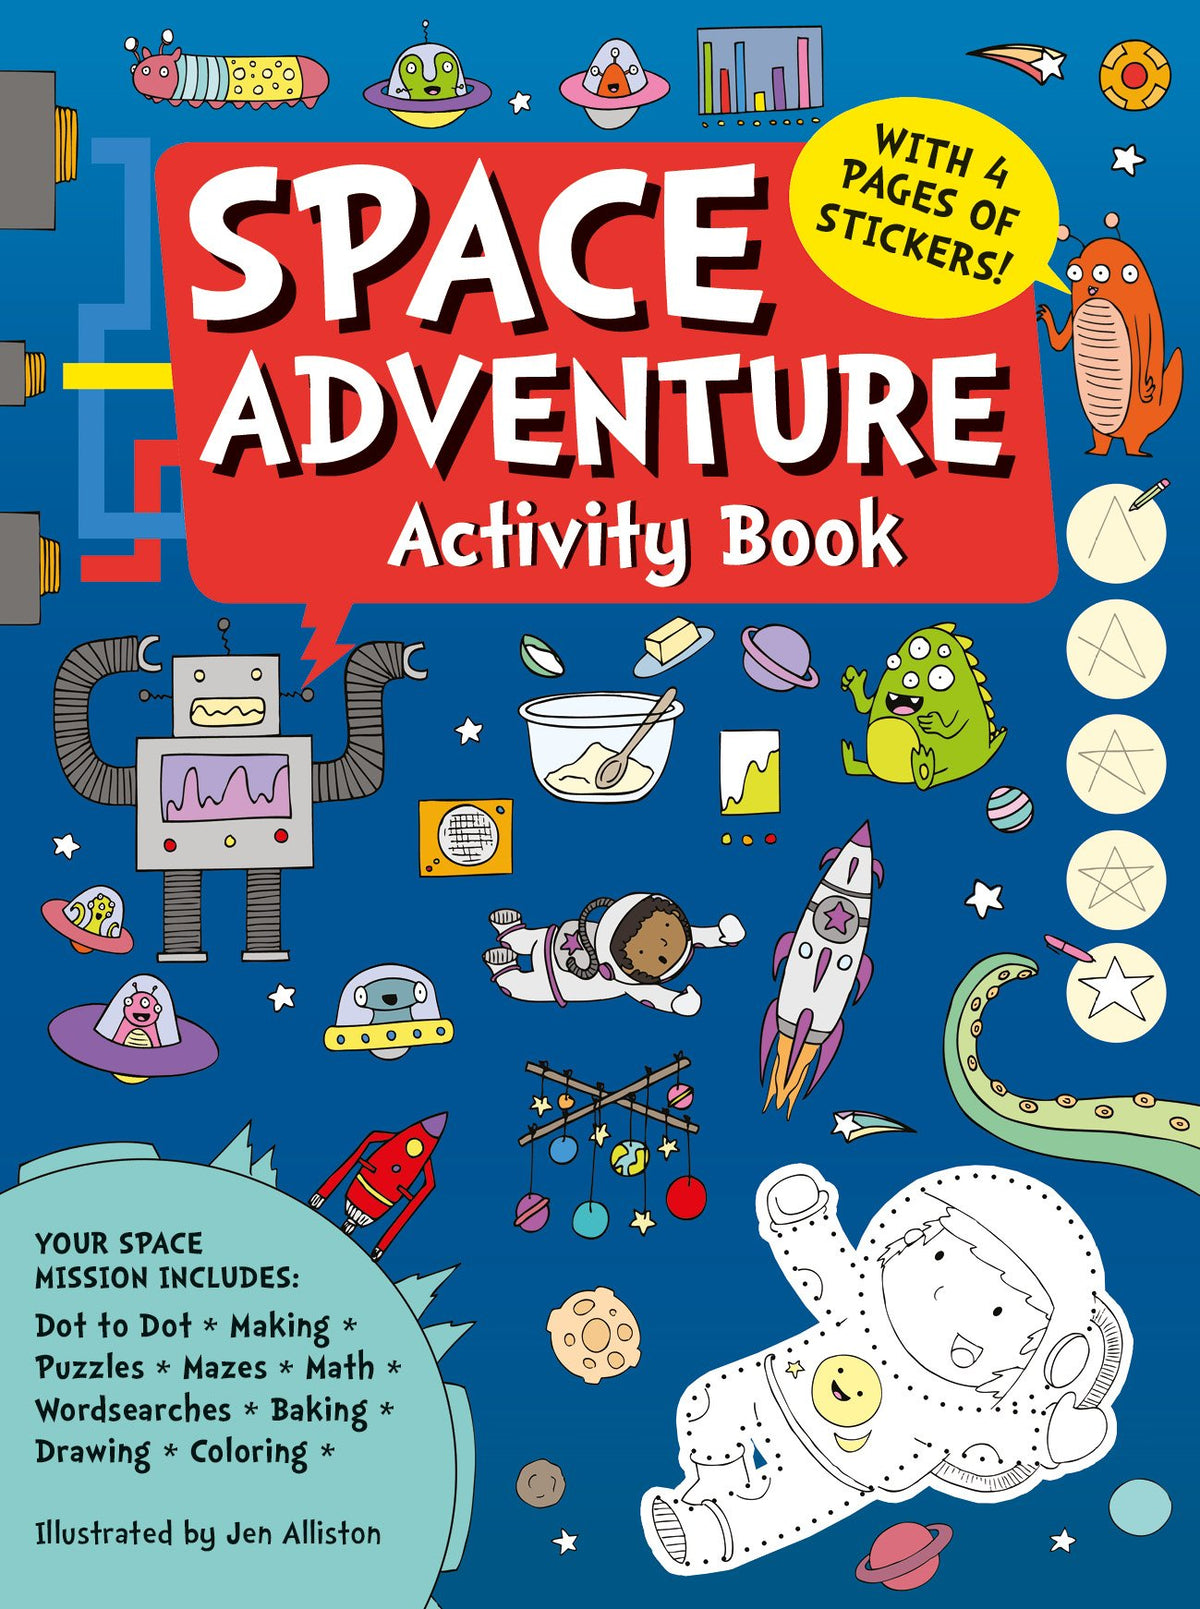 Space Adventure Activity Book by Mia Underwood